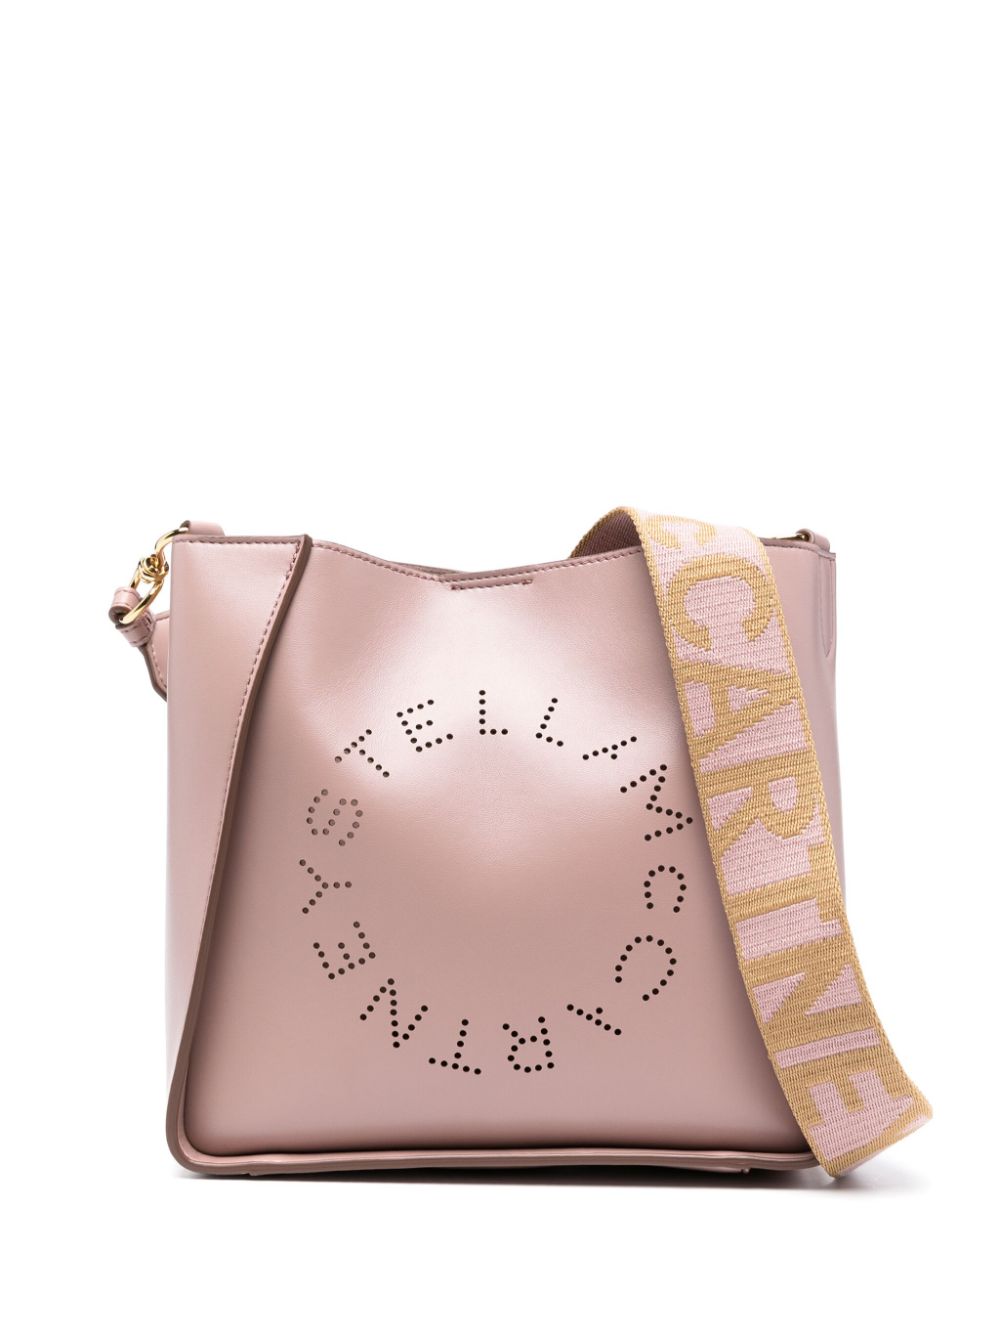 STELLA MCCARTNEY Powder Pink Faux Leather Handbag - Shoulder Bag for Women